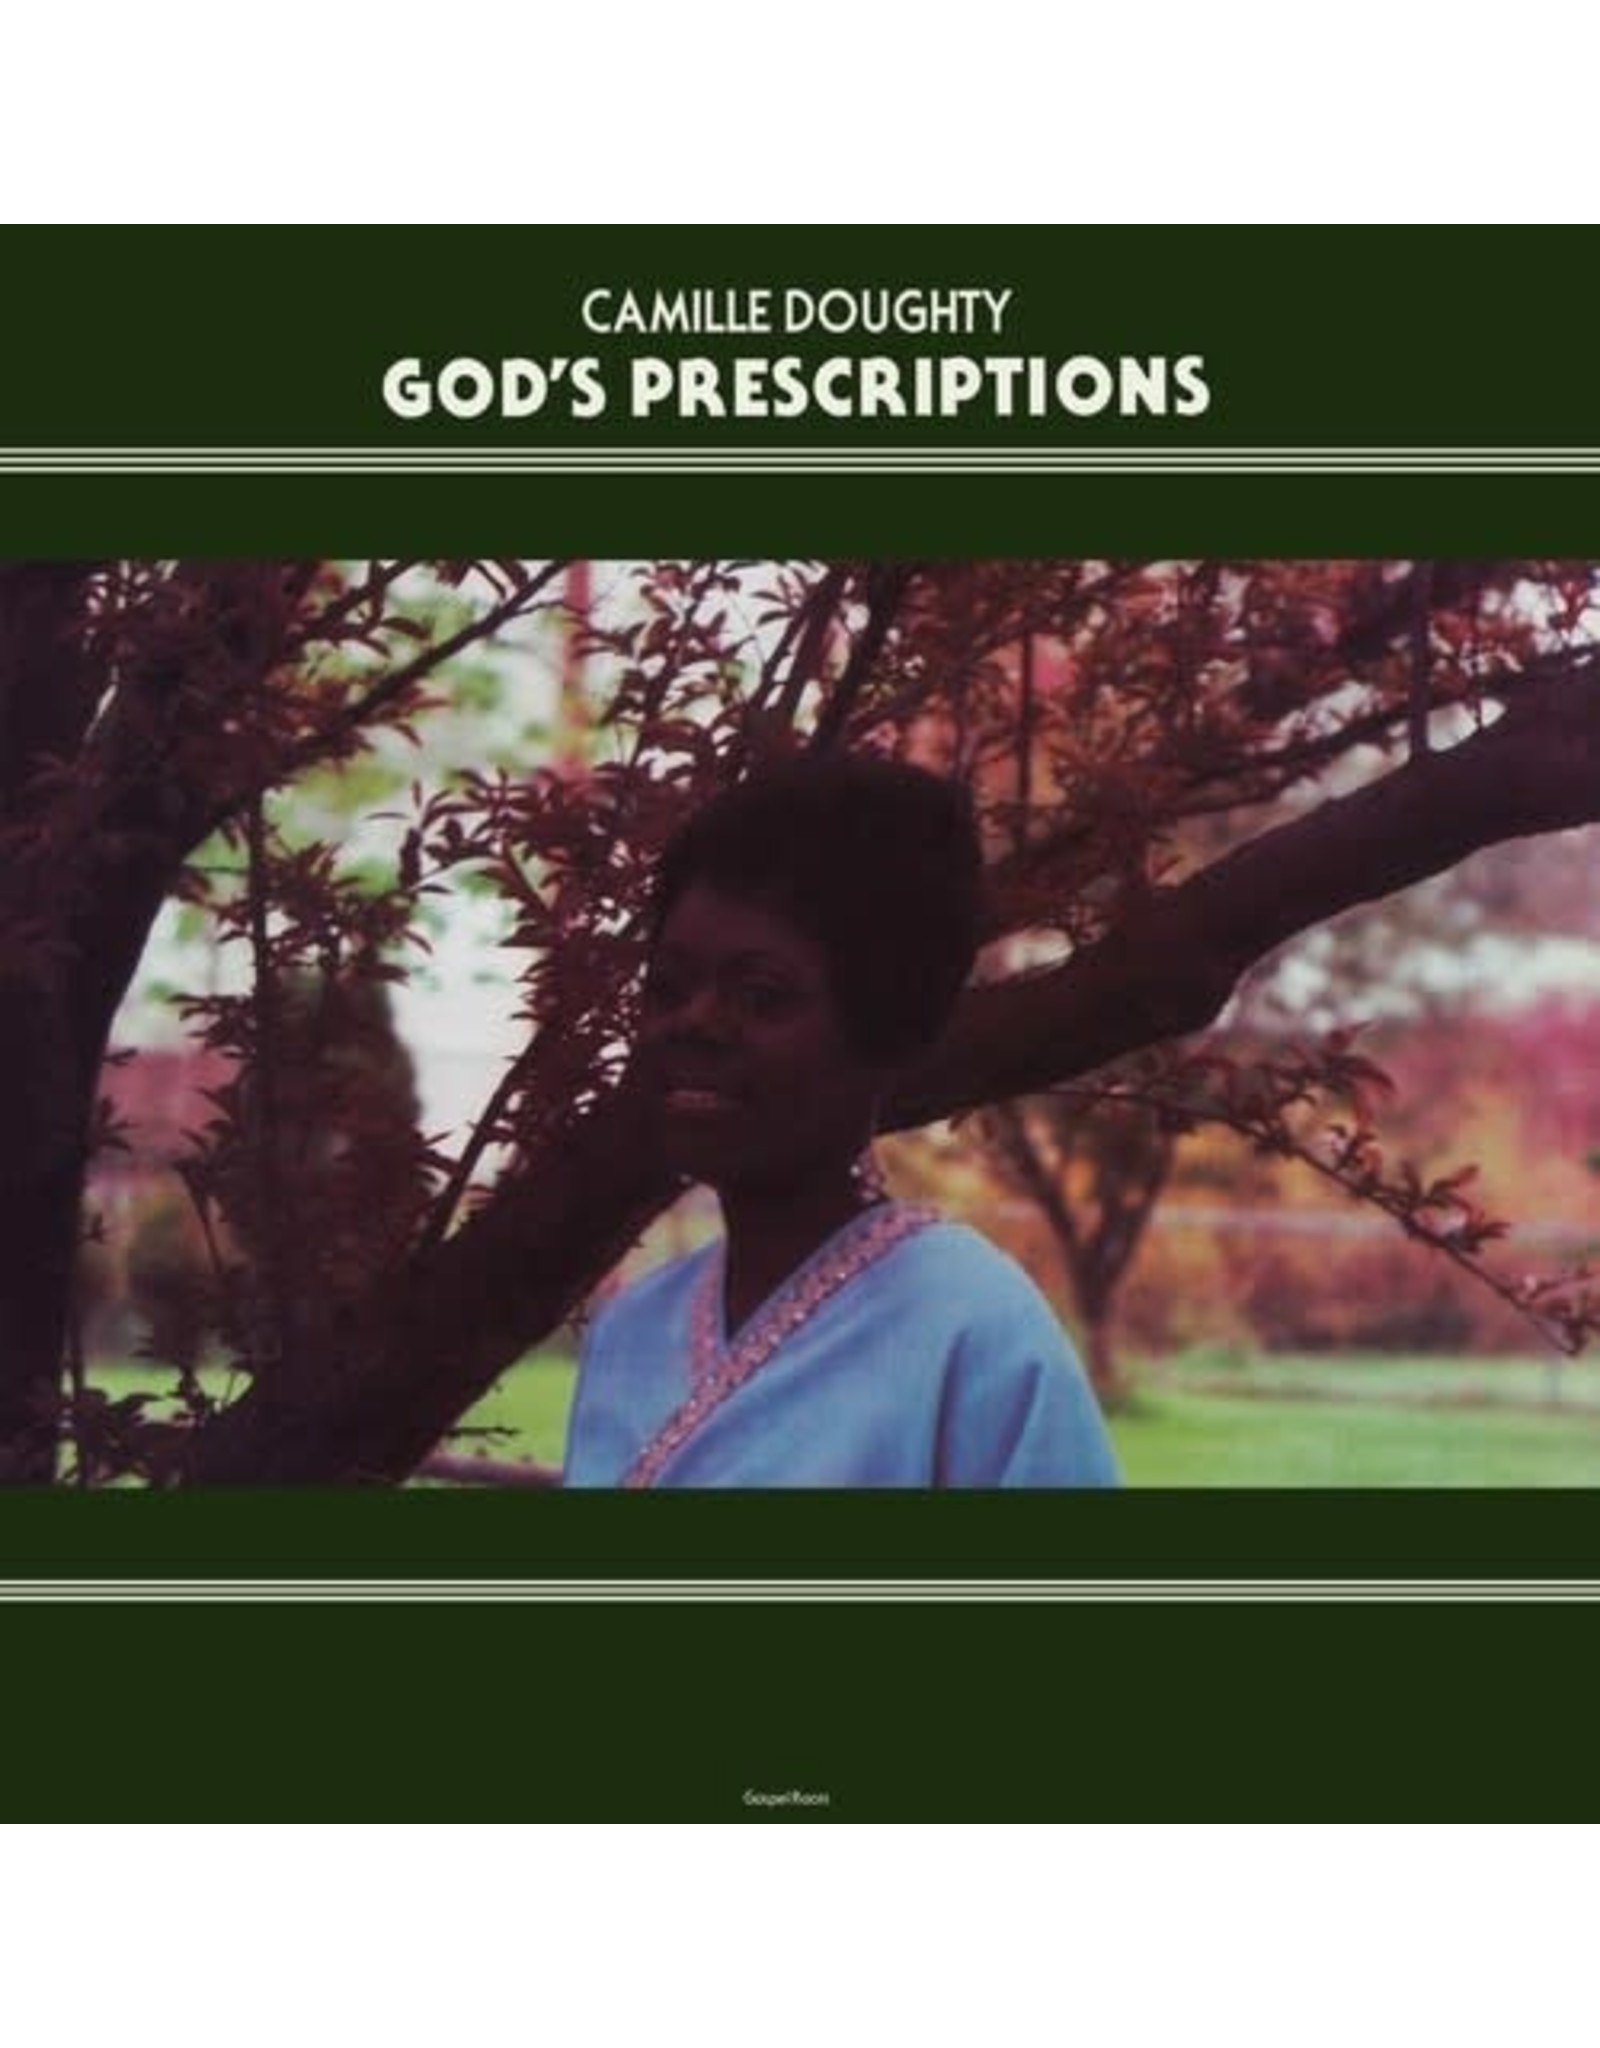 New Vinyl Camille Doughty - God's Prescription (Green, Remastered) LP